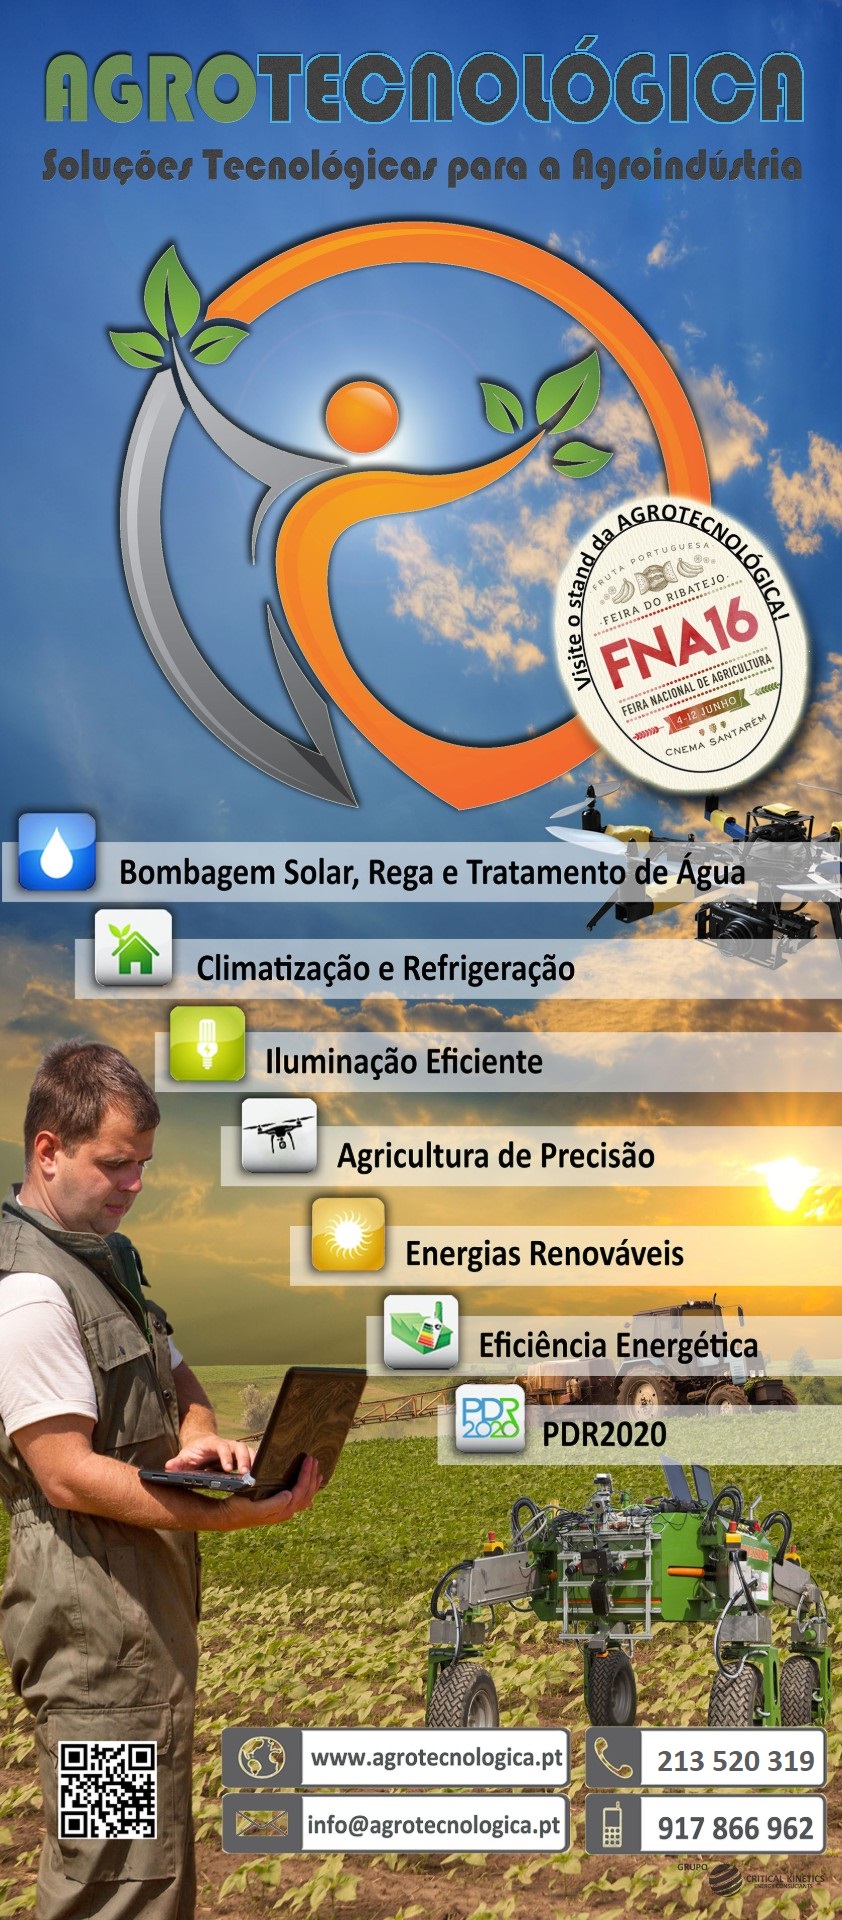 FNA2016 Agrotecnologica